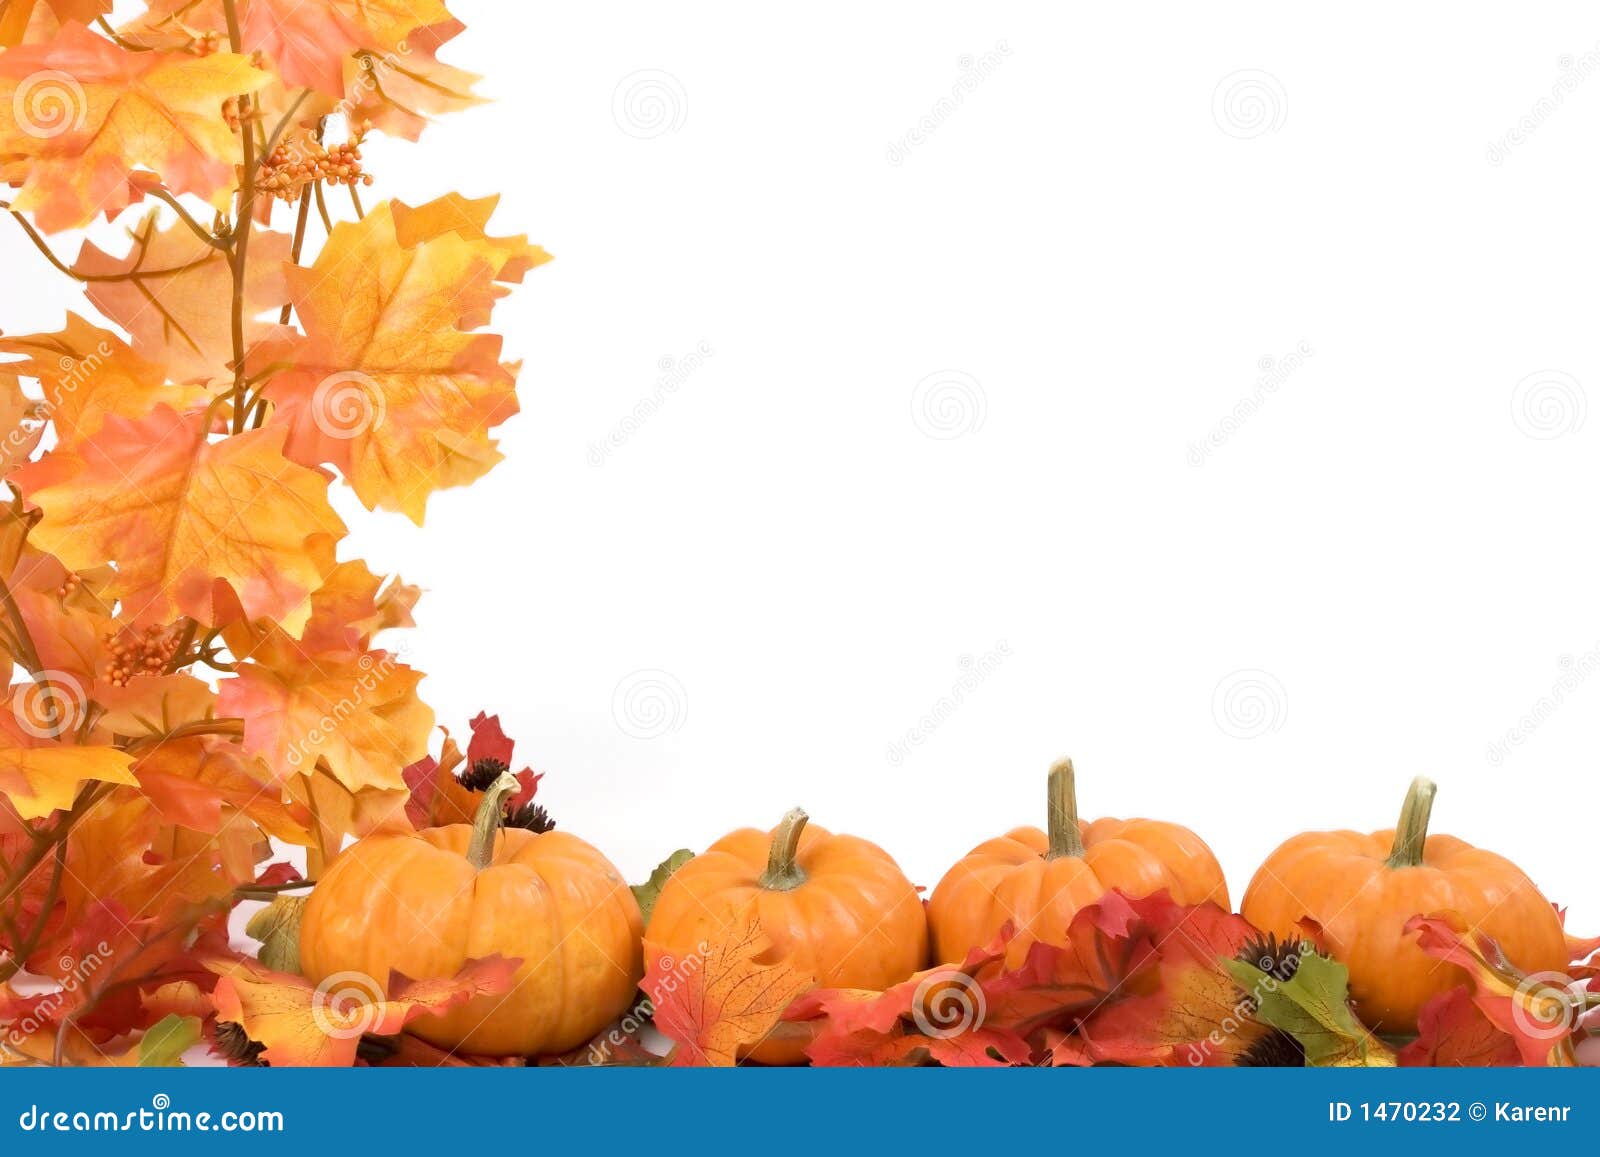 clip art fall leaves pumpkins - photo #44